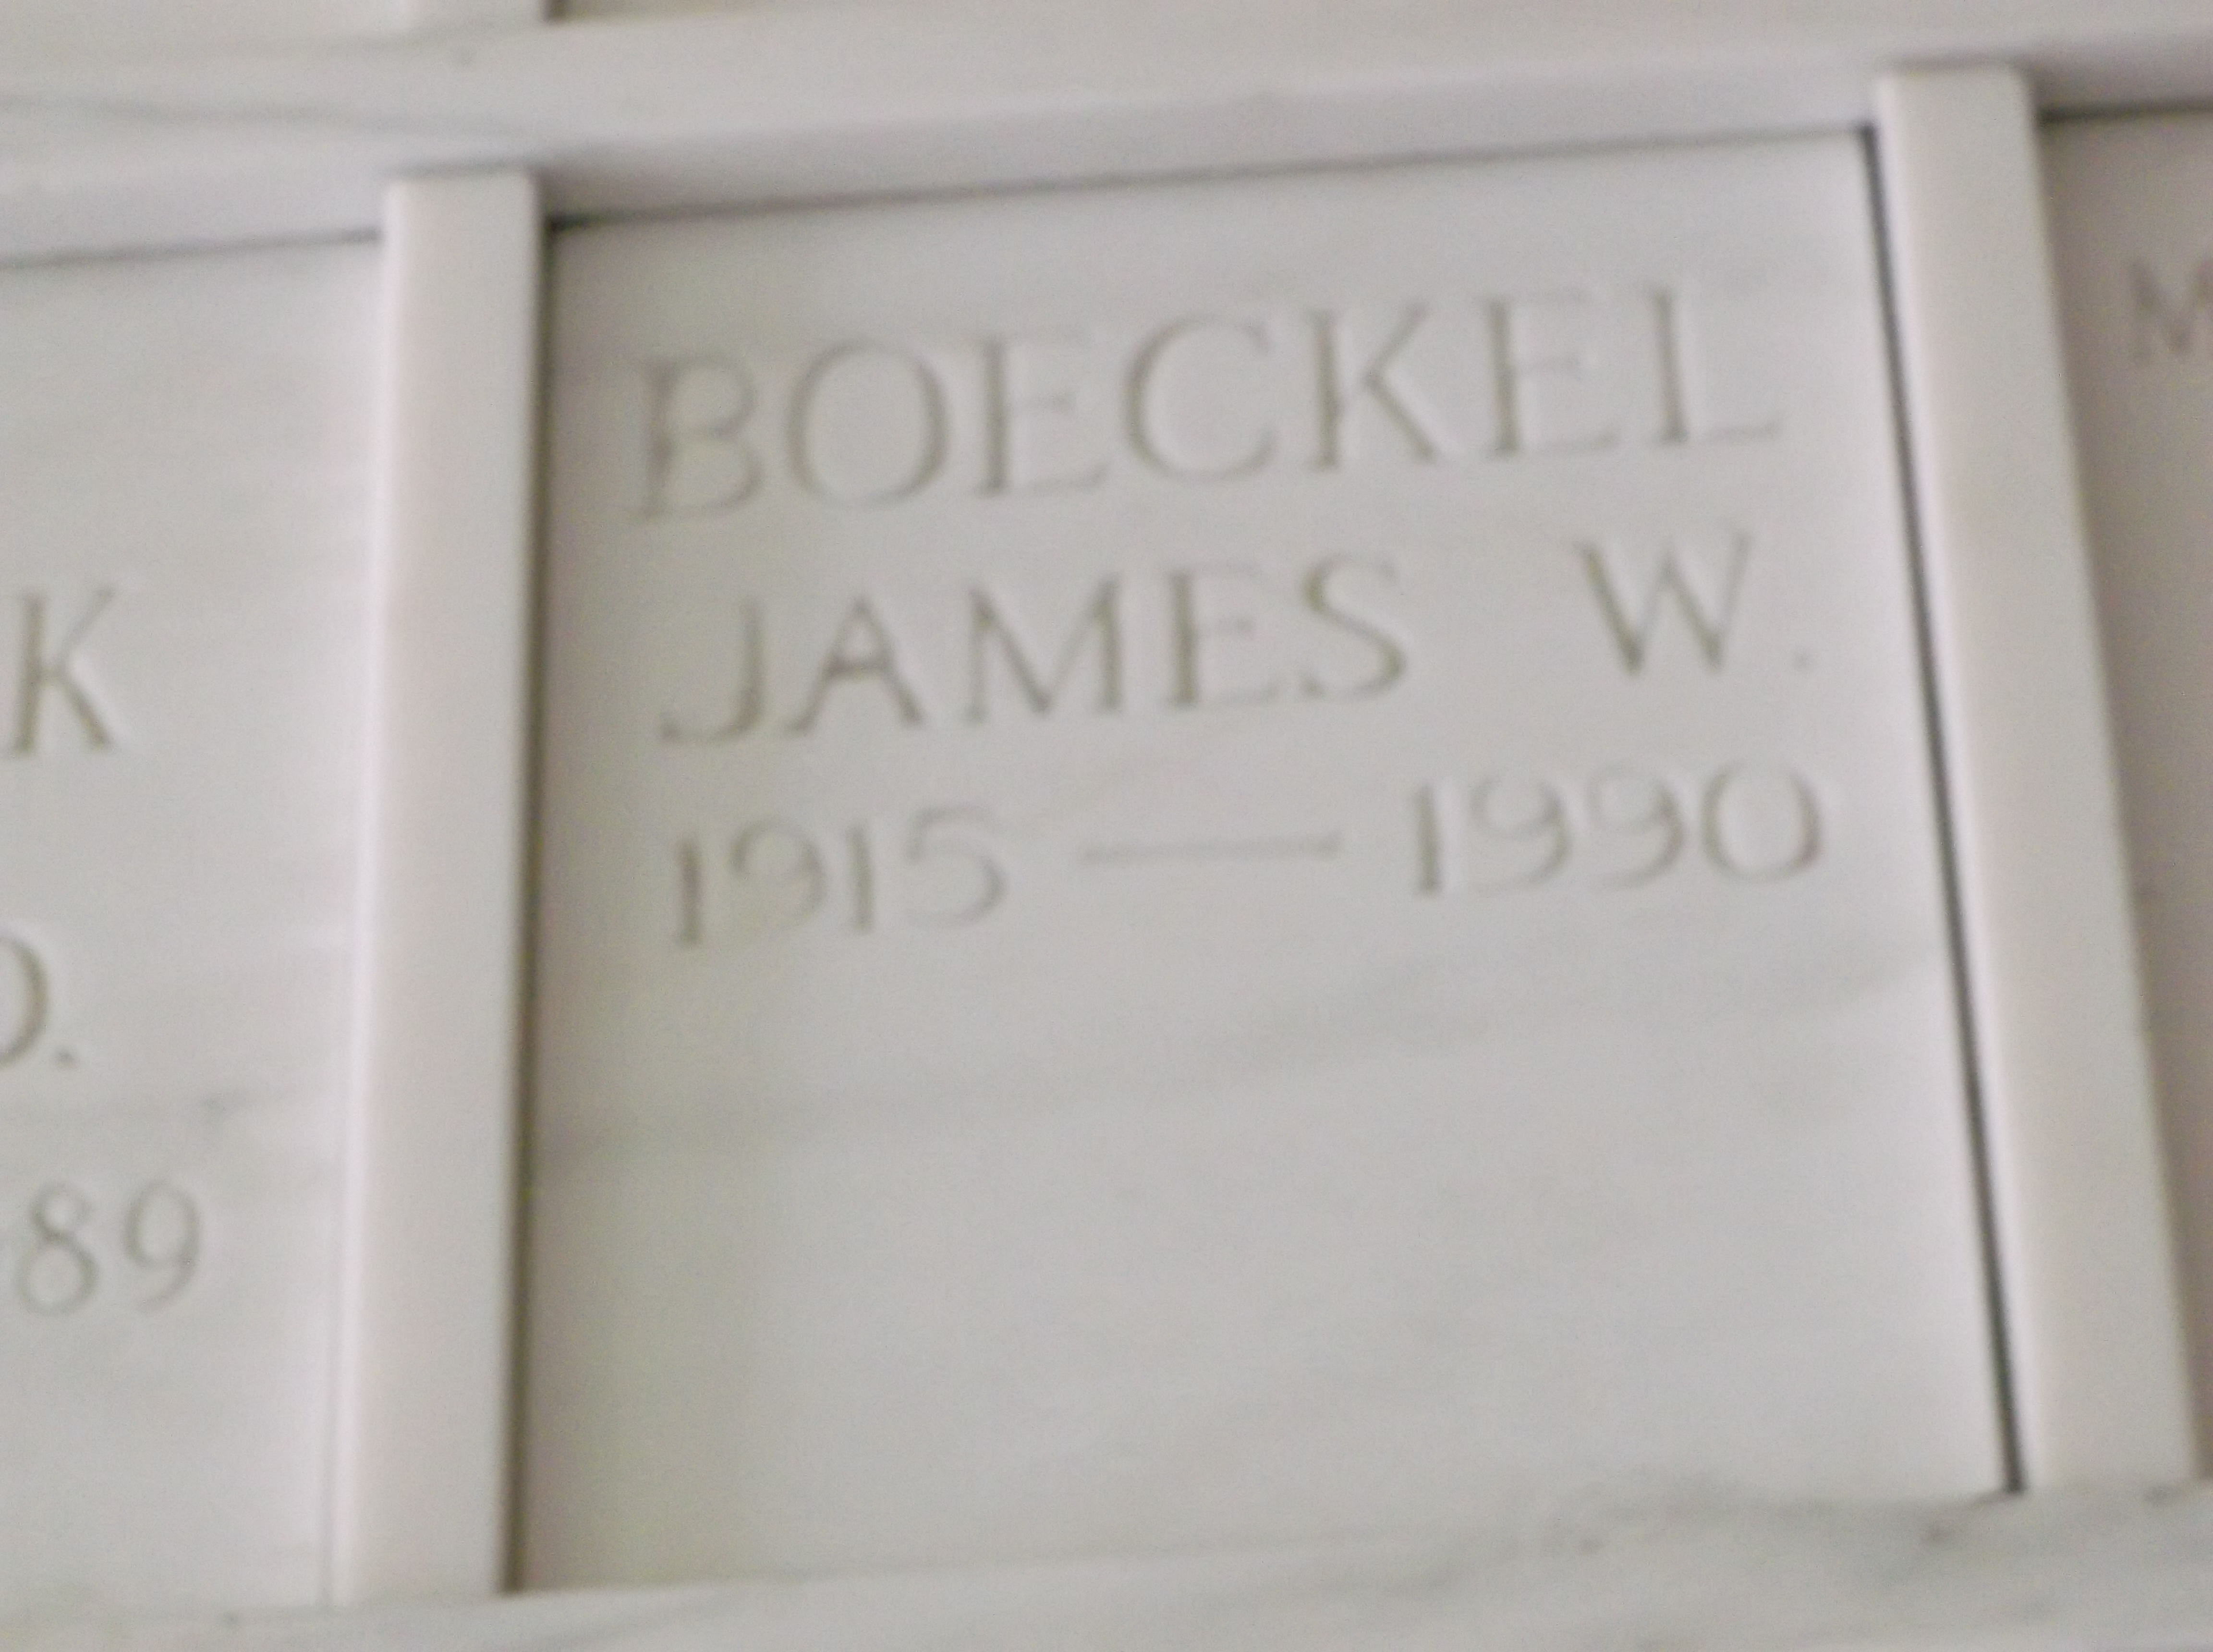 James W Boeckel